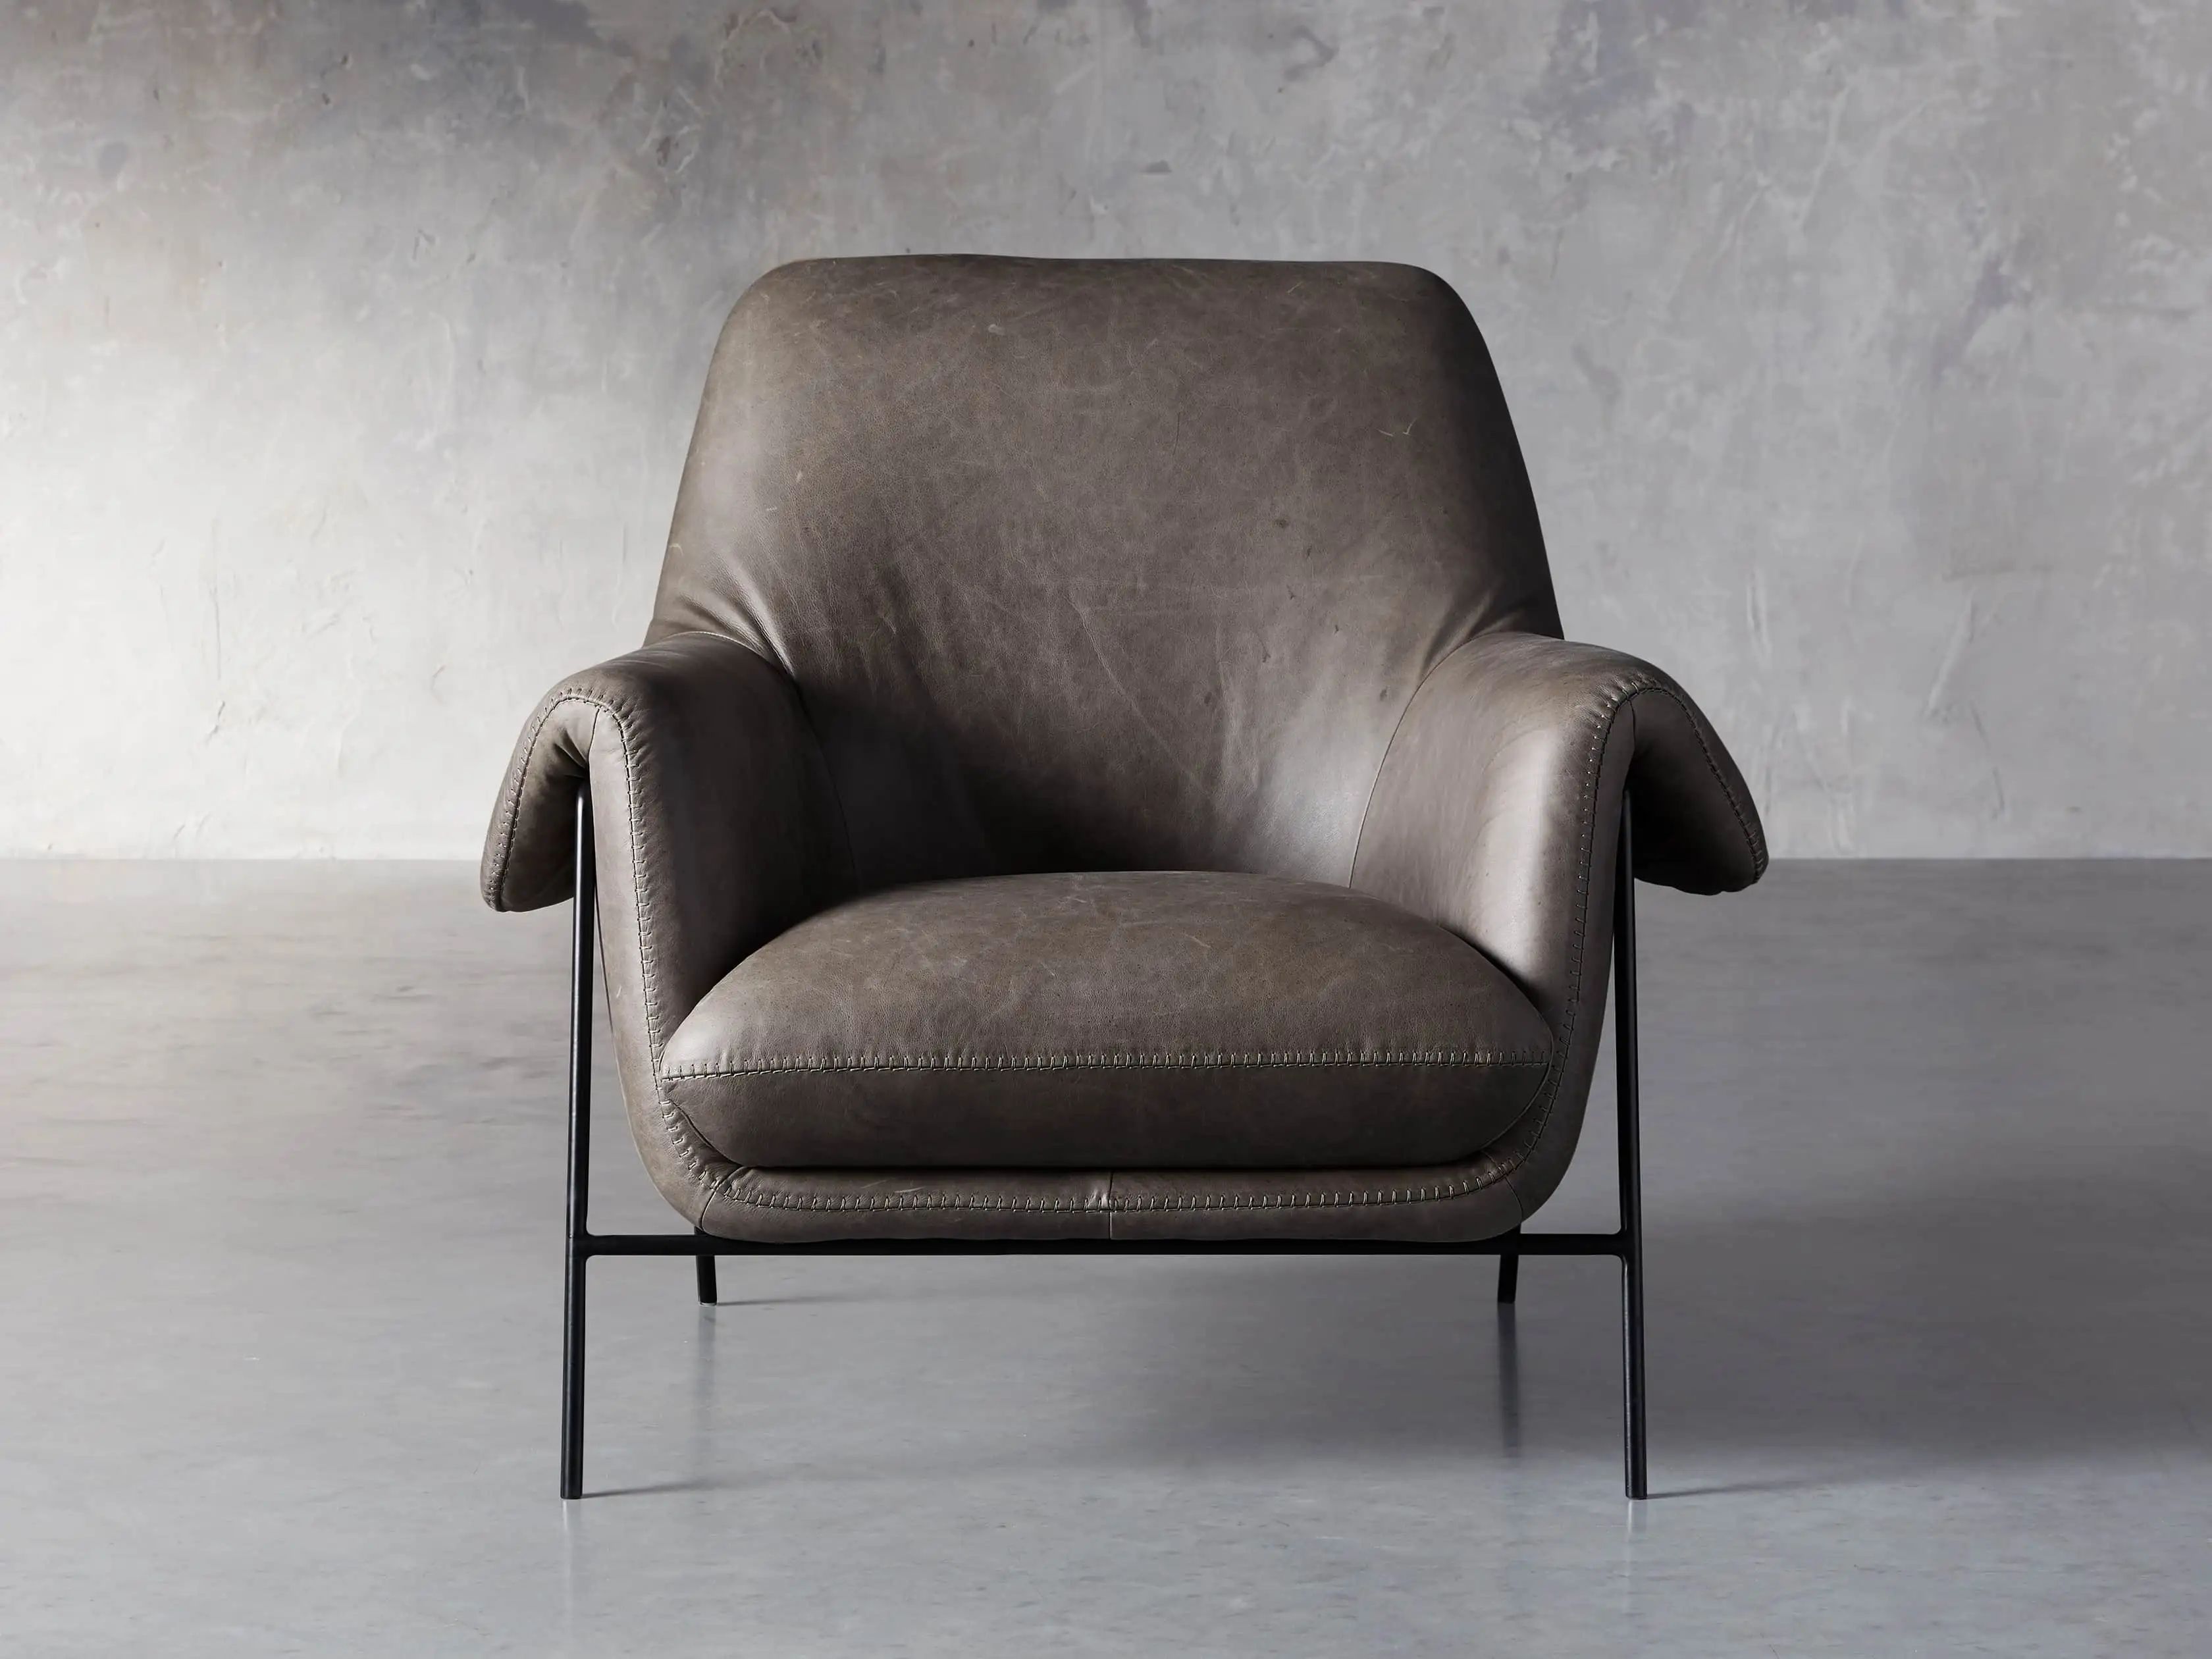 Engles Leather 35"" Chair in Saddlebag Lead | Arhaus